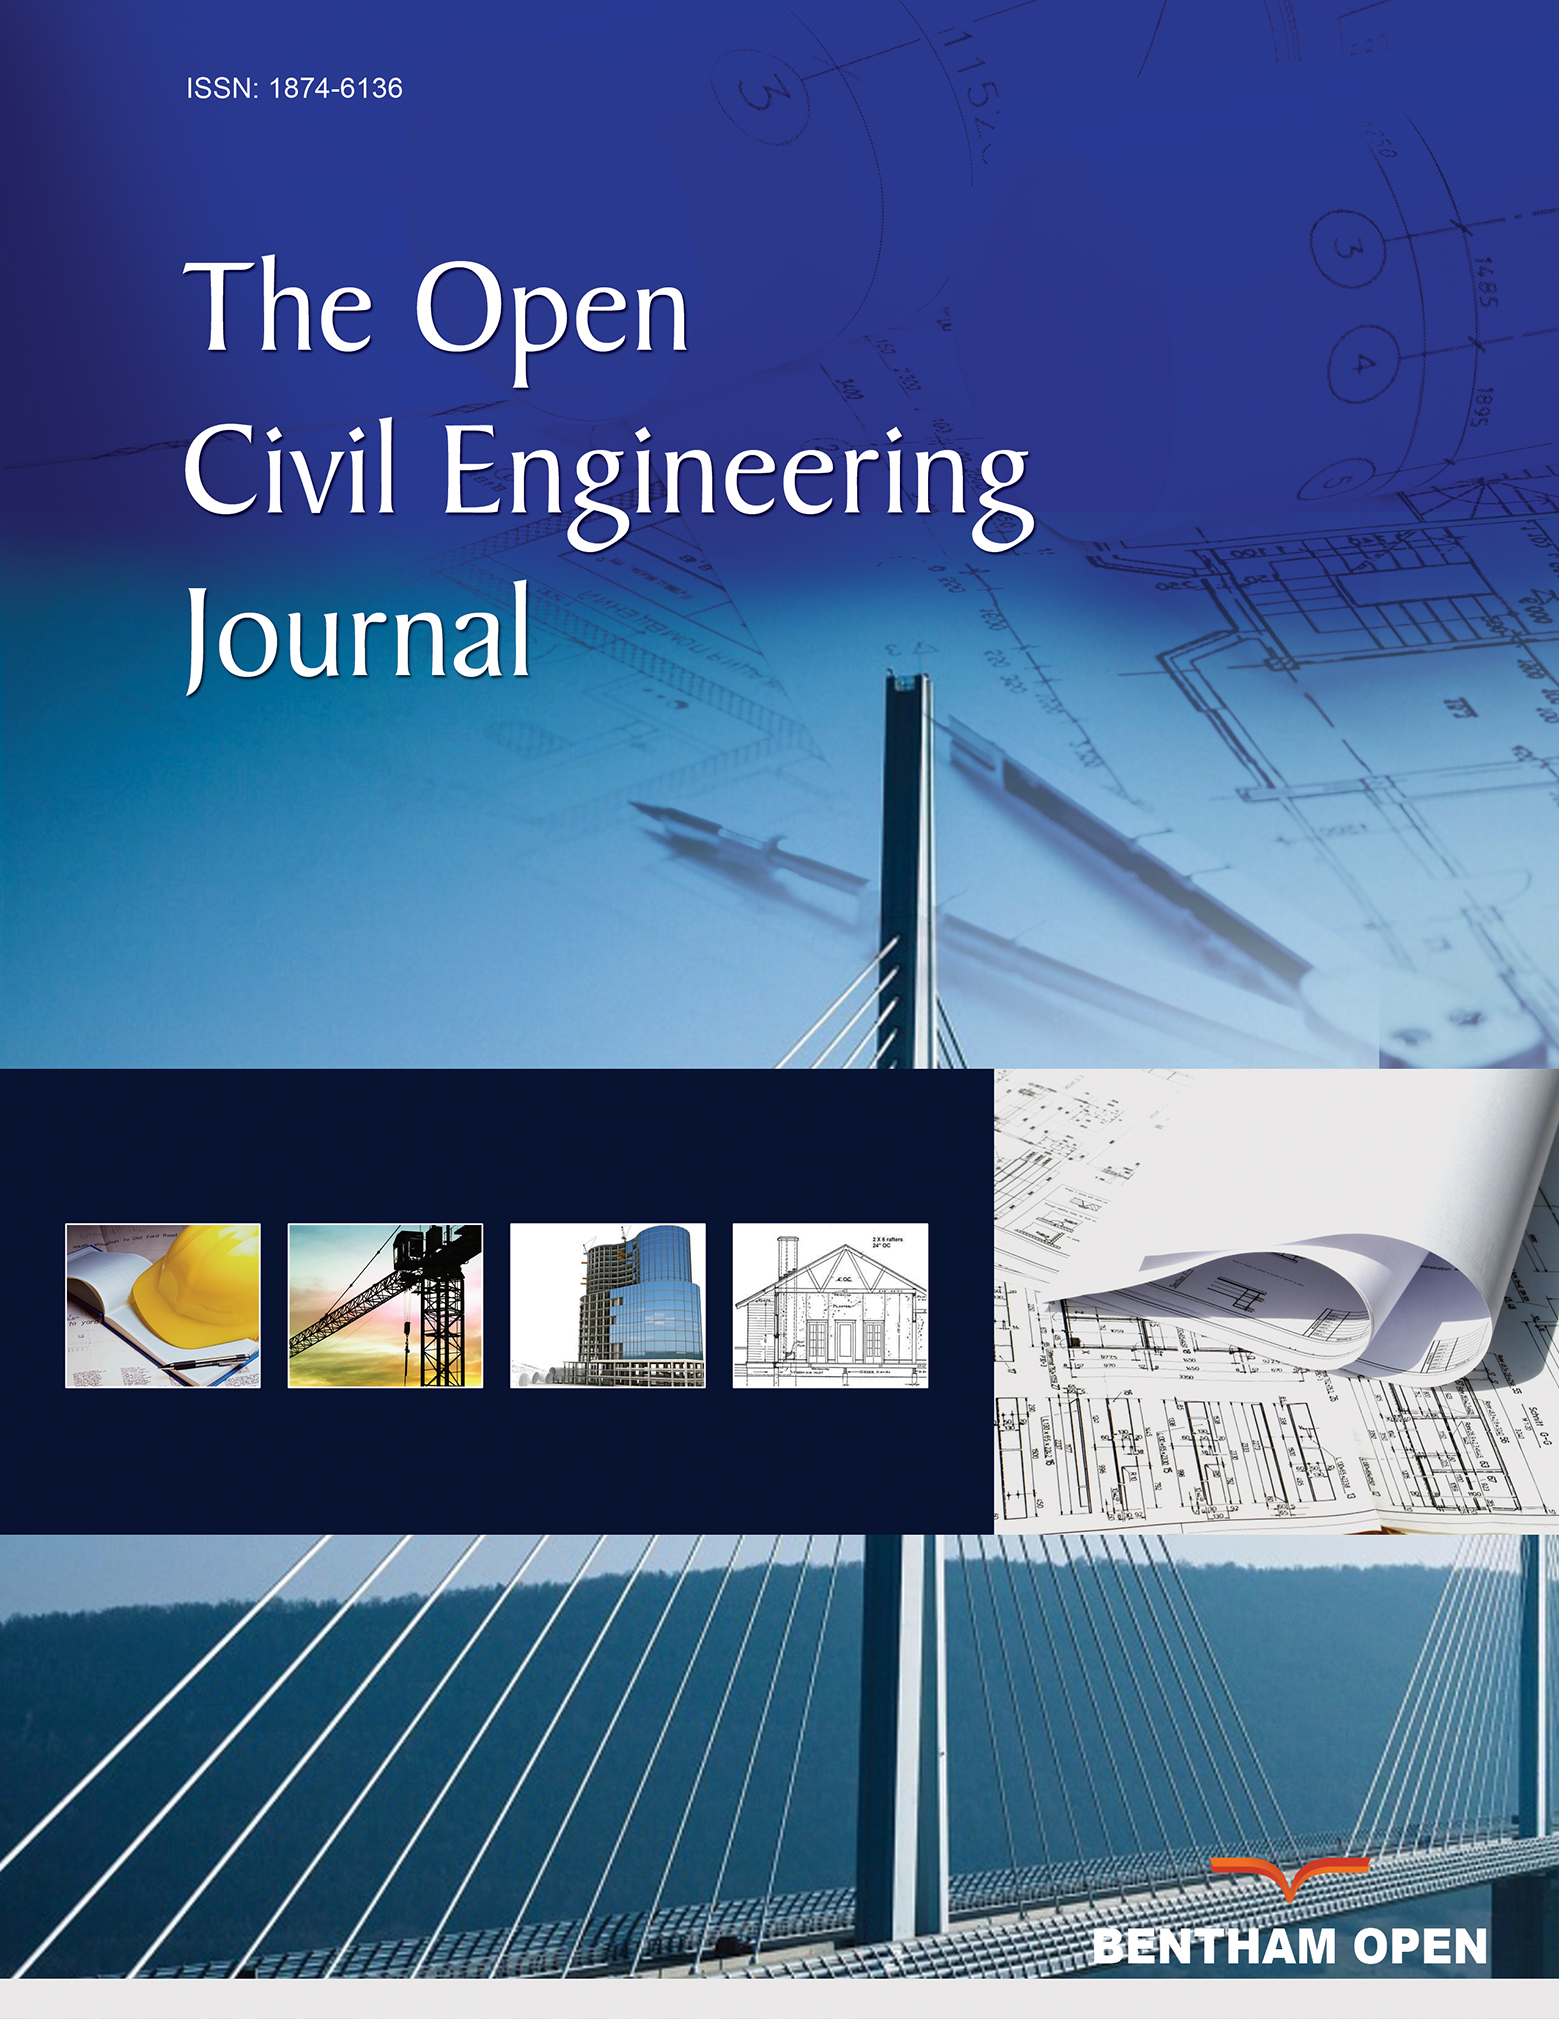 The Open Civil Engineering Journal